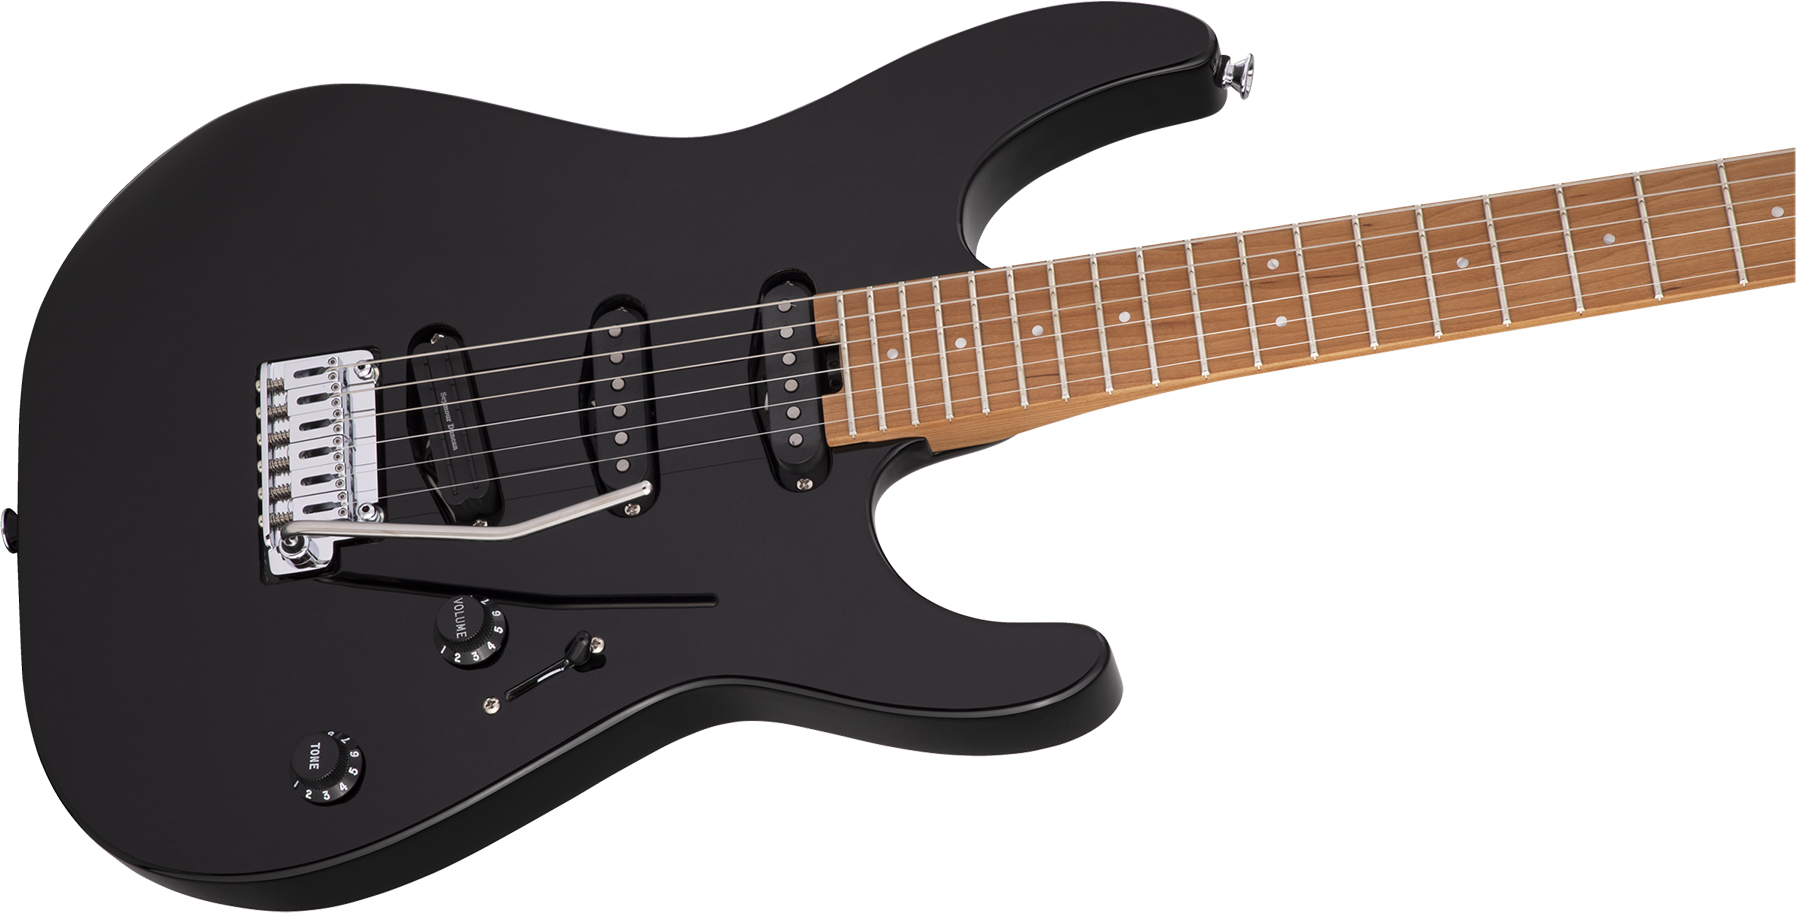 Charvel Dinky Dk22 Sss 2pt Cm Pro-mod 3s Seymour Duncan Trem Mn - Gloss Black - Elektrische gitaar in Str-vorm - Variation 2